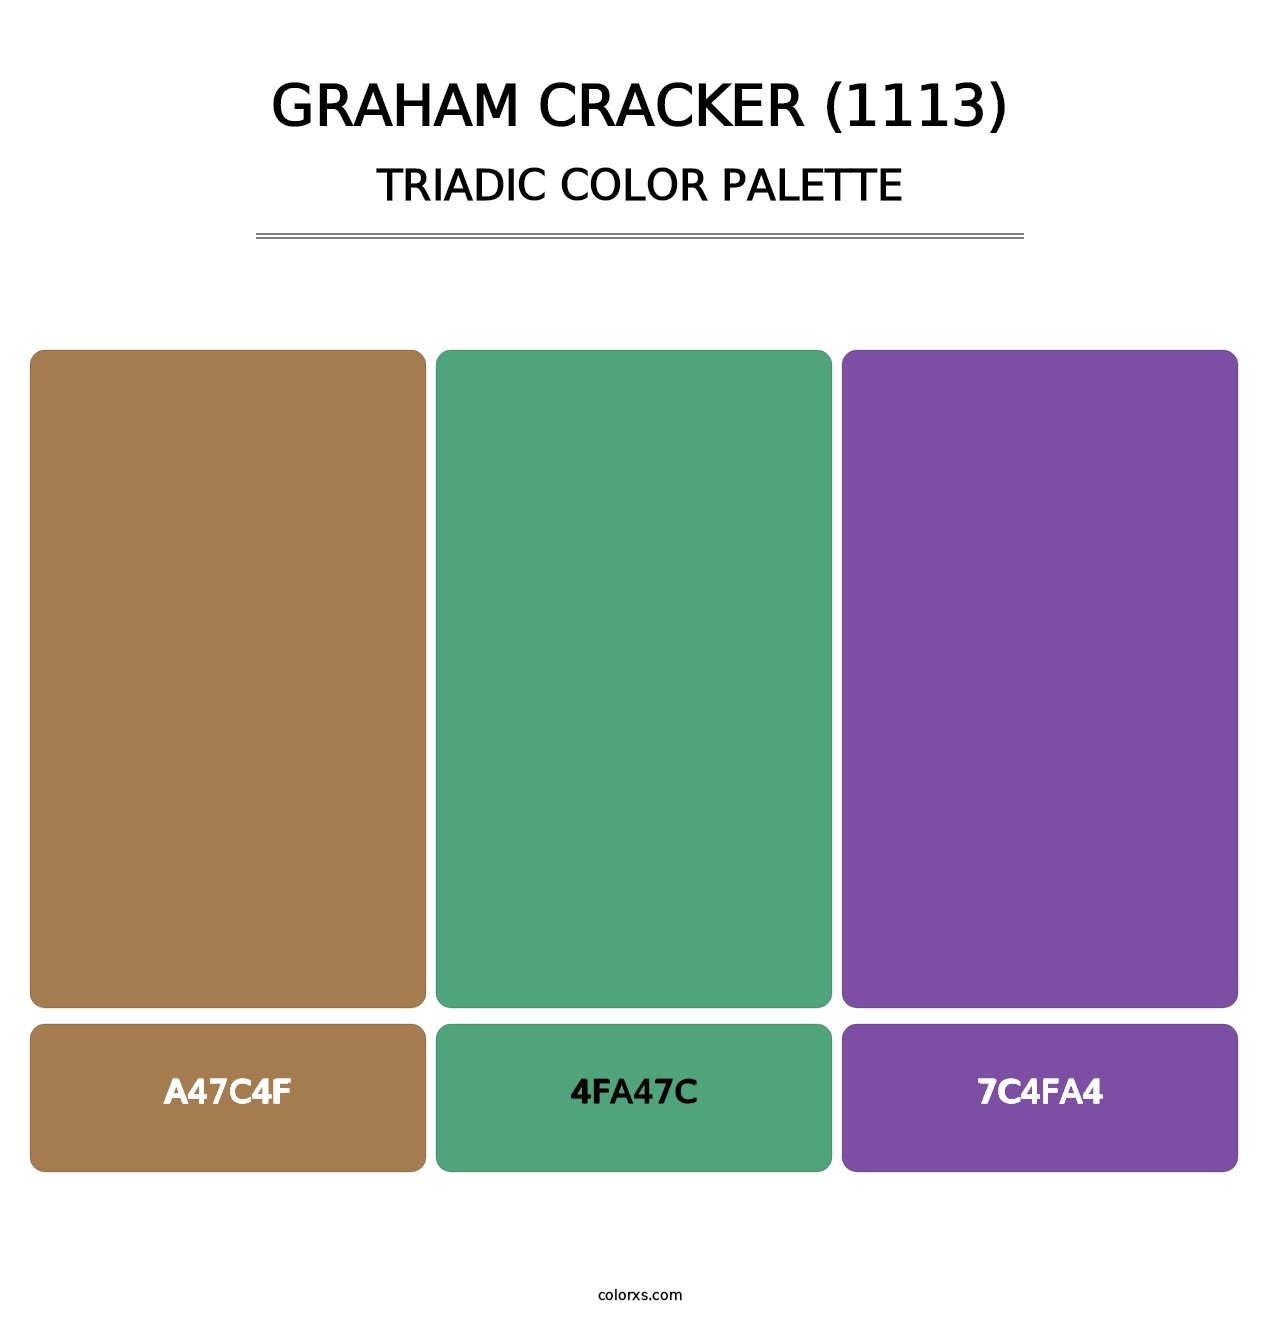 Graham Cracker (1113) - Triadic Color Palette